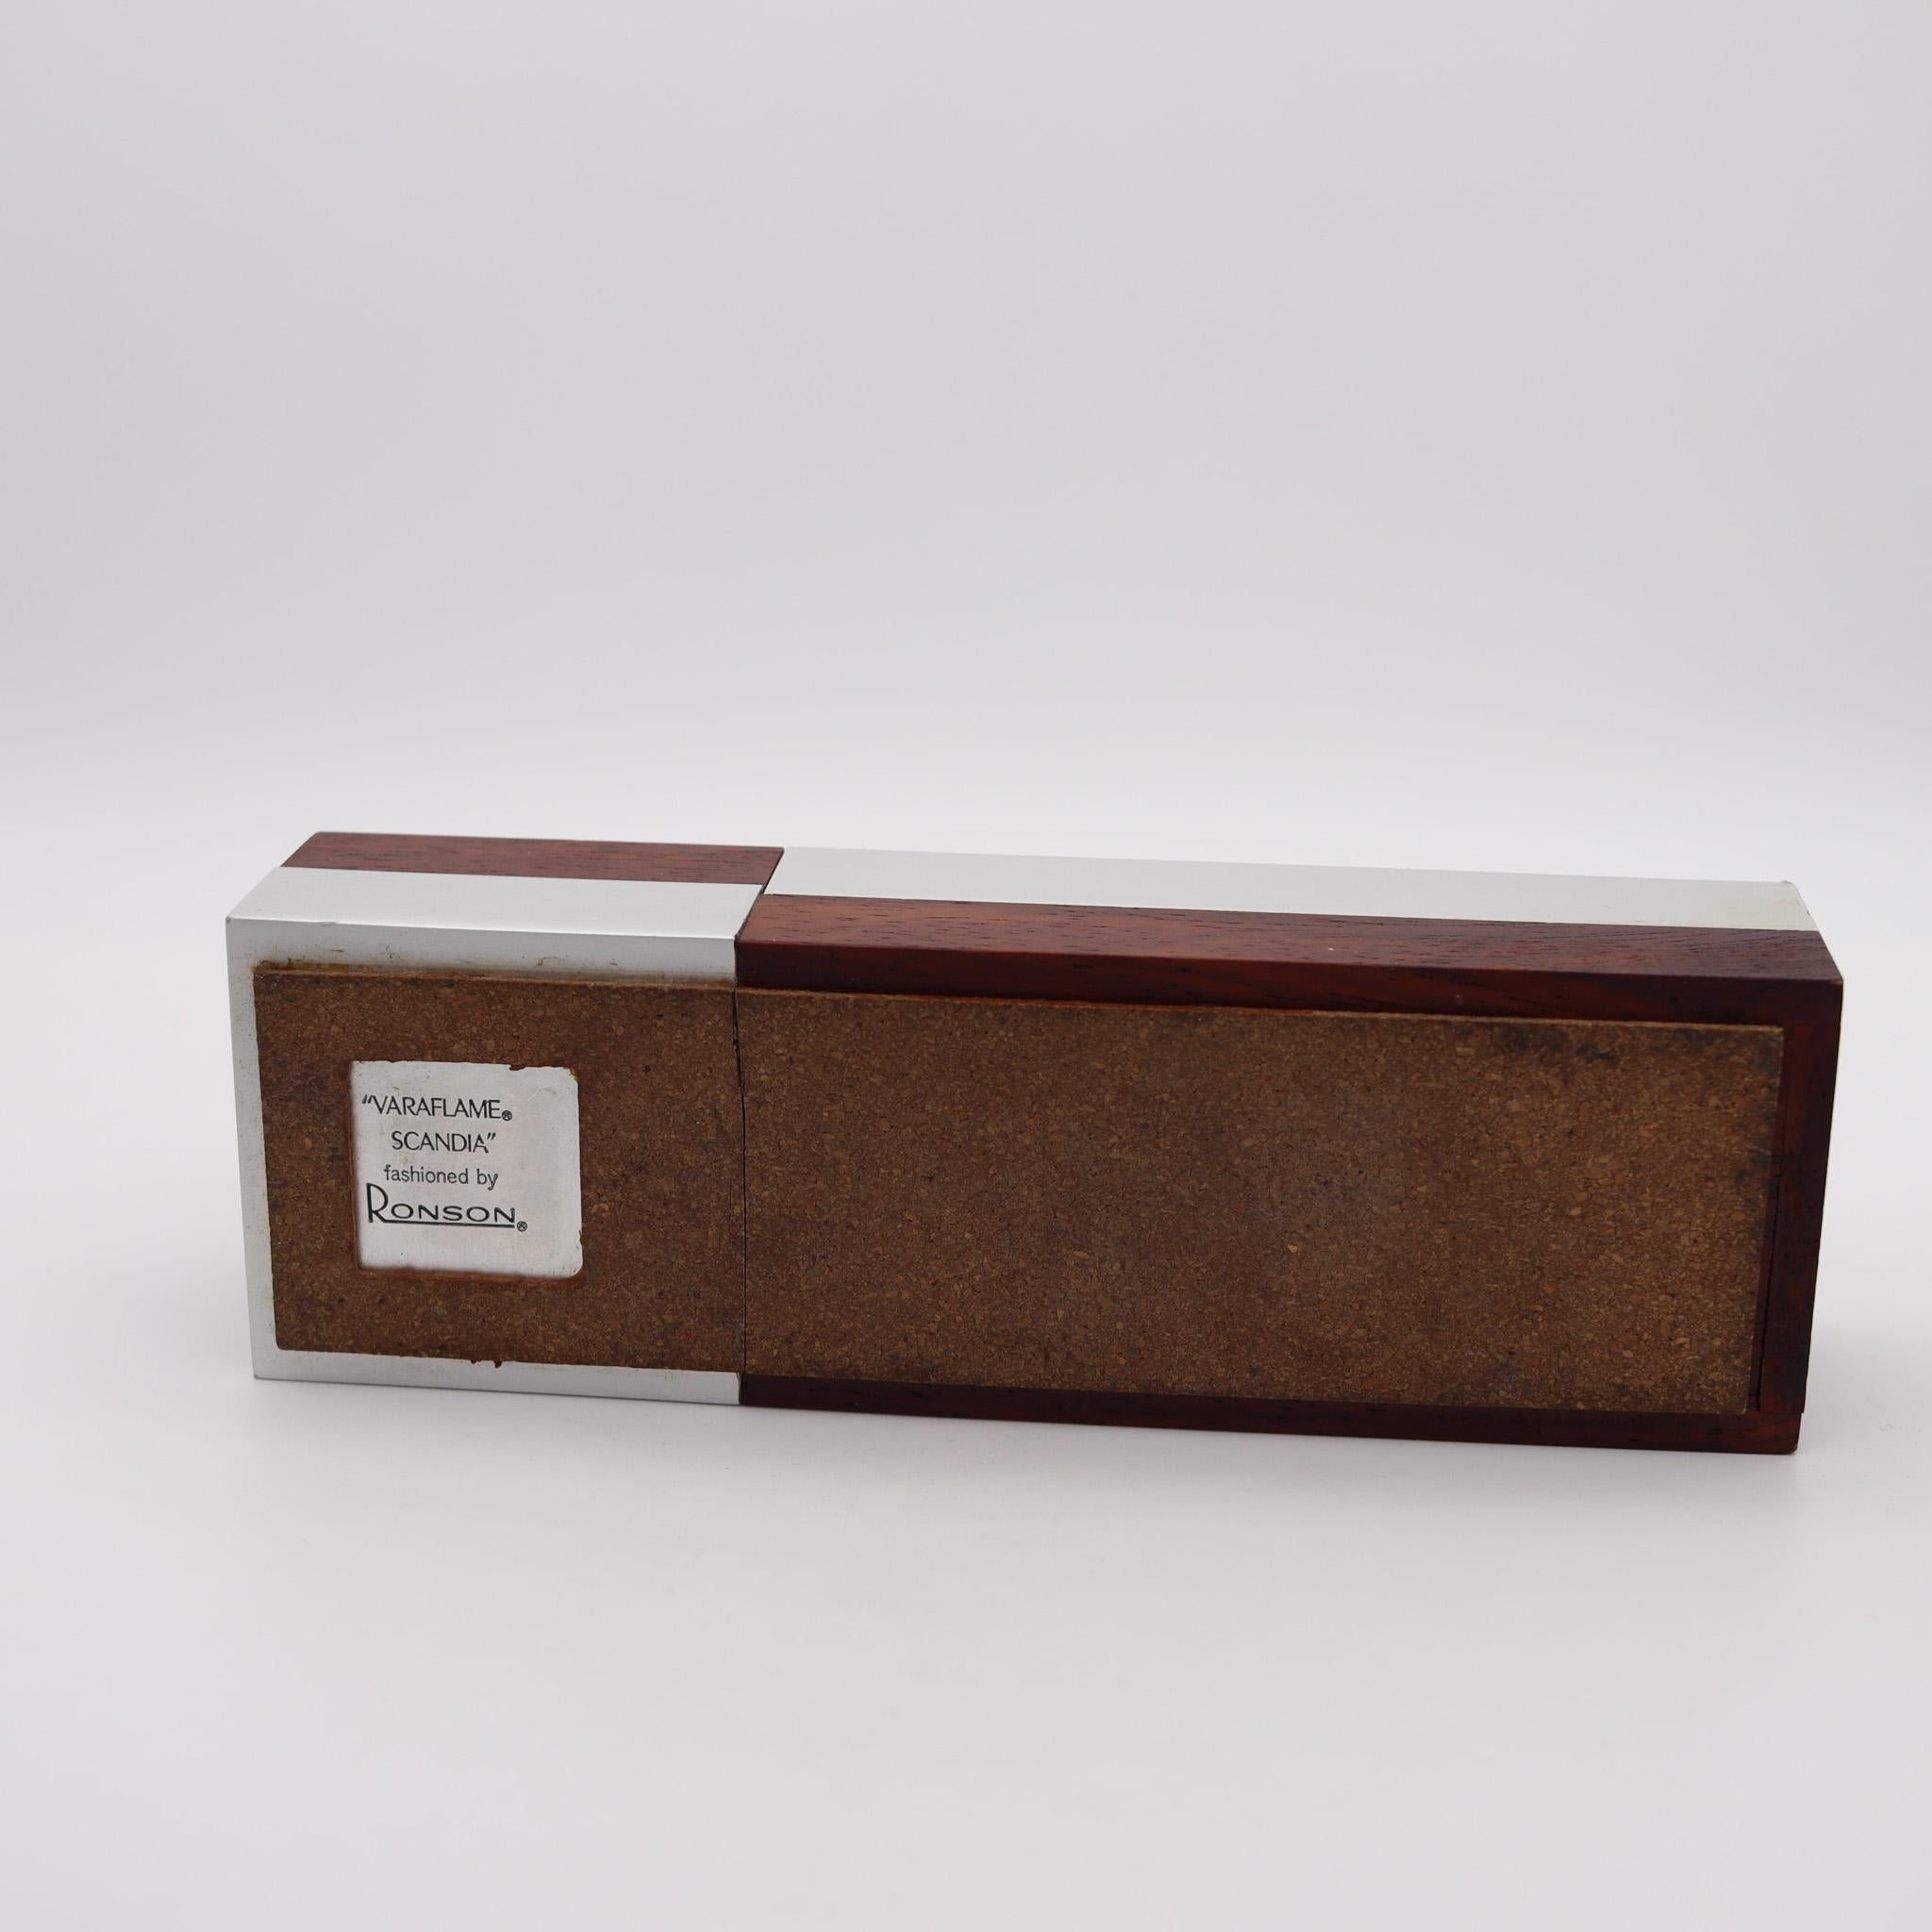 RONSON 1960 Germany Modernist Cigarette Lighter Box in Cedar & Brushed Aluminum For Sale 1